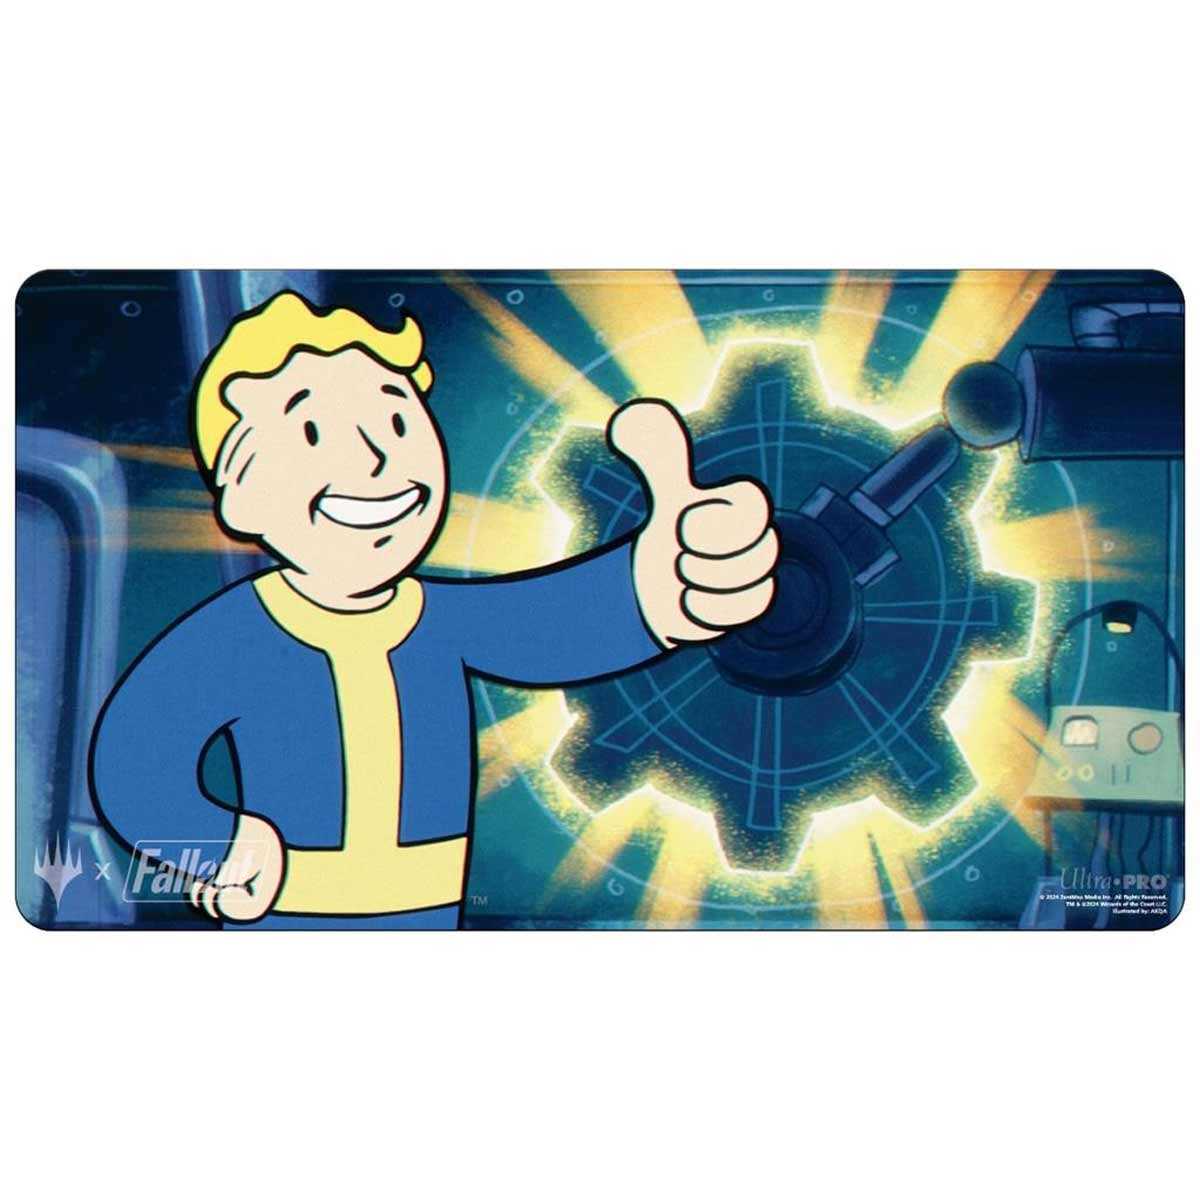 Fallout V1 Playmat Ultrapro...